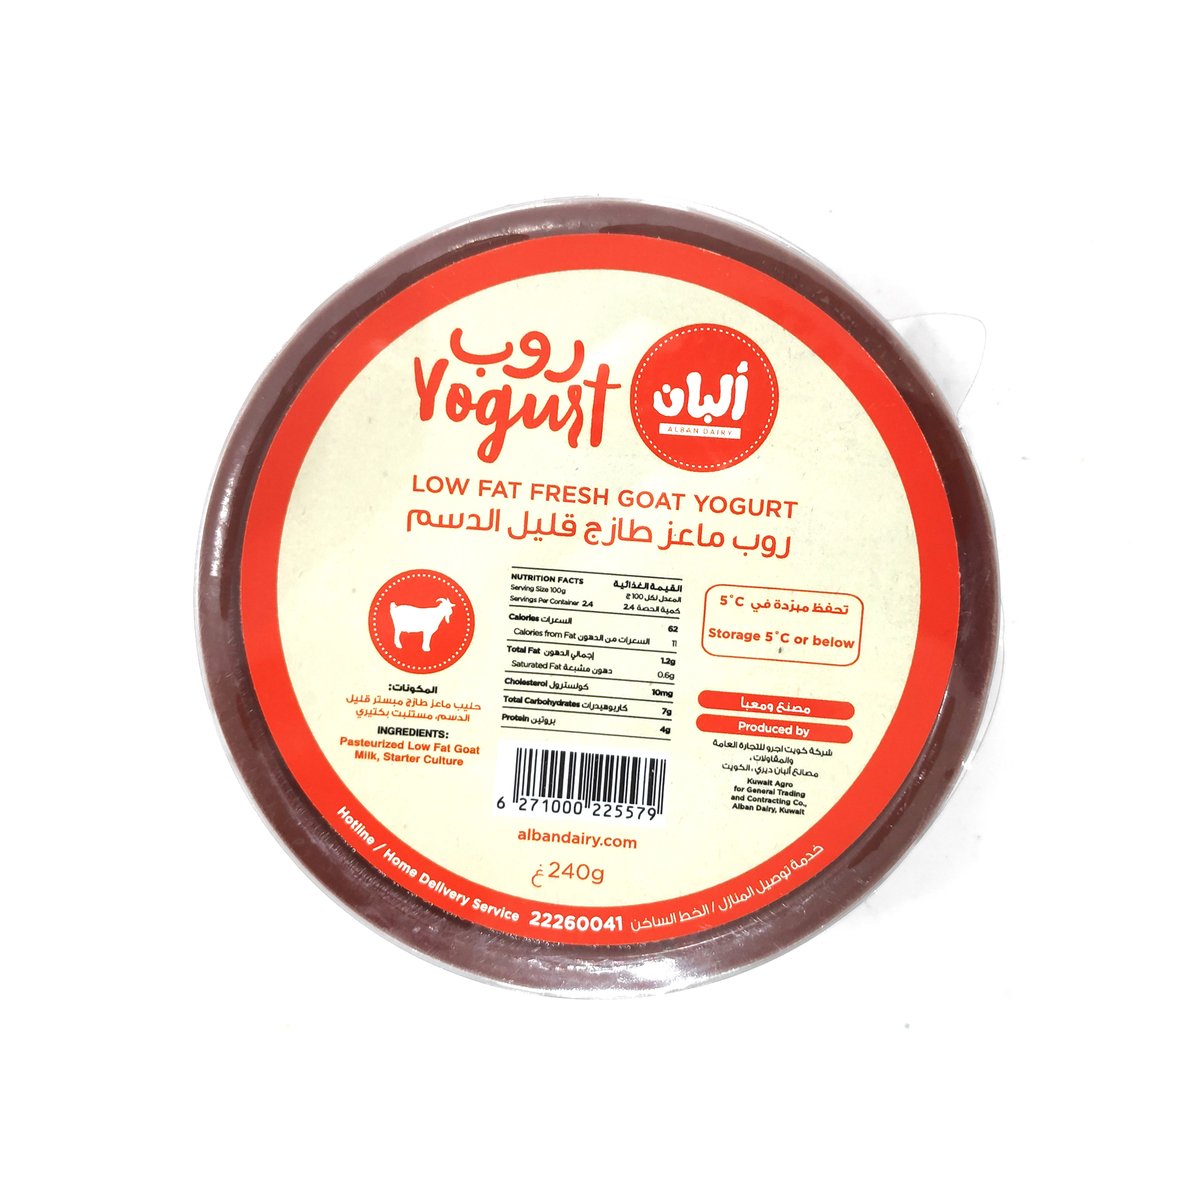 Yasmin Farms Low Fat Fresh Goat Yogurt 240g